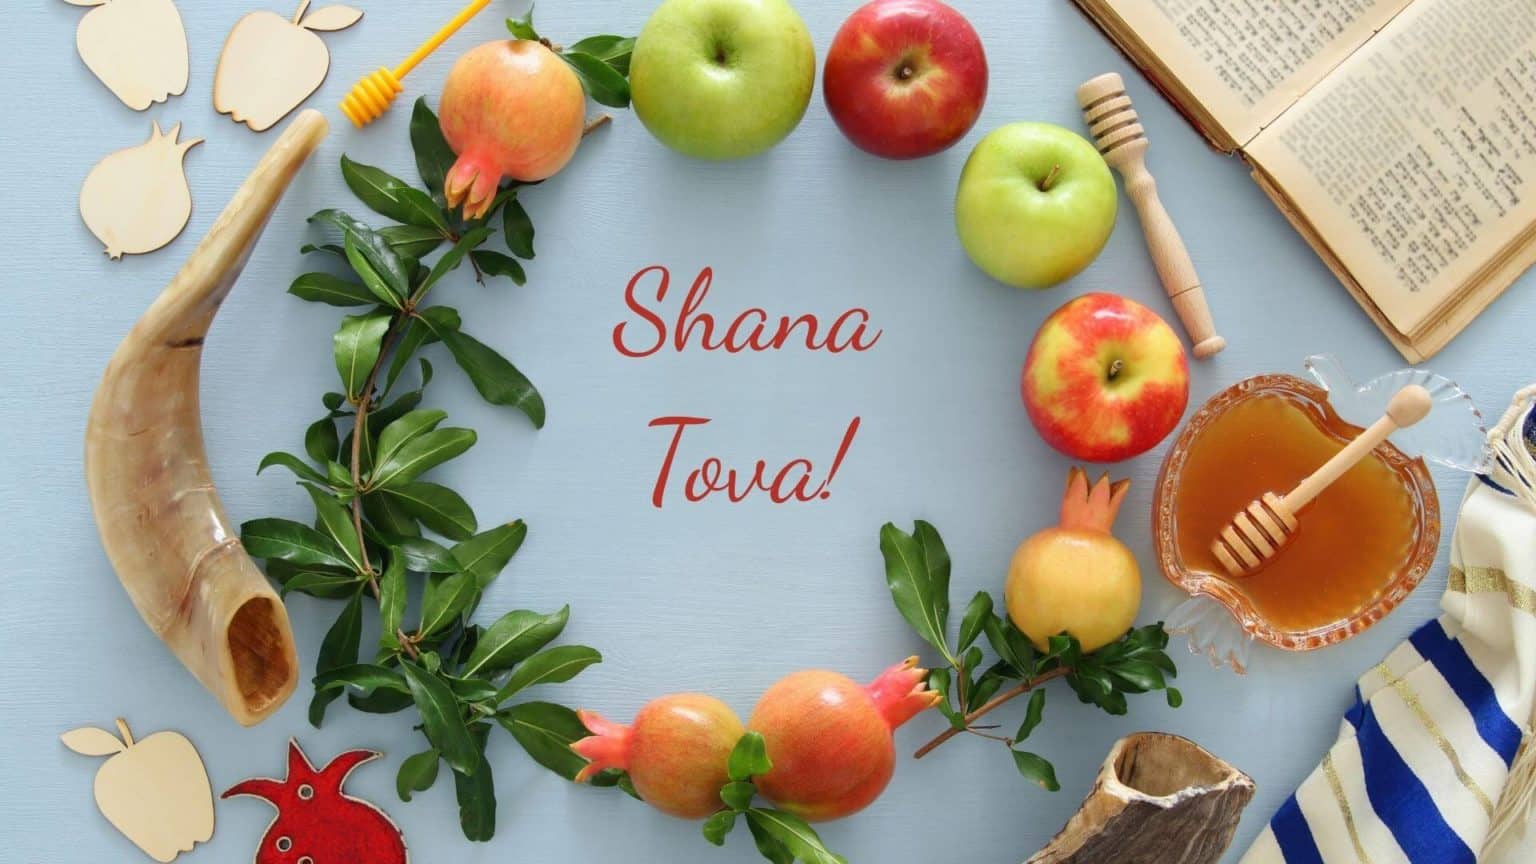 Learn Rosh Hashanah Greetings in English, Hebrew, and Yiddish B'nai